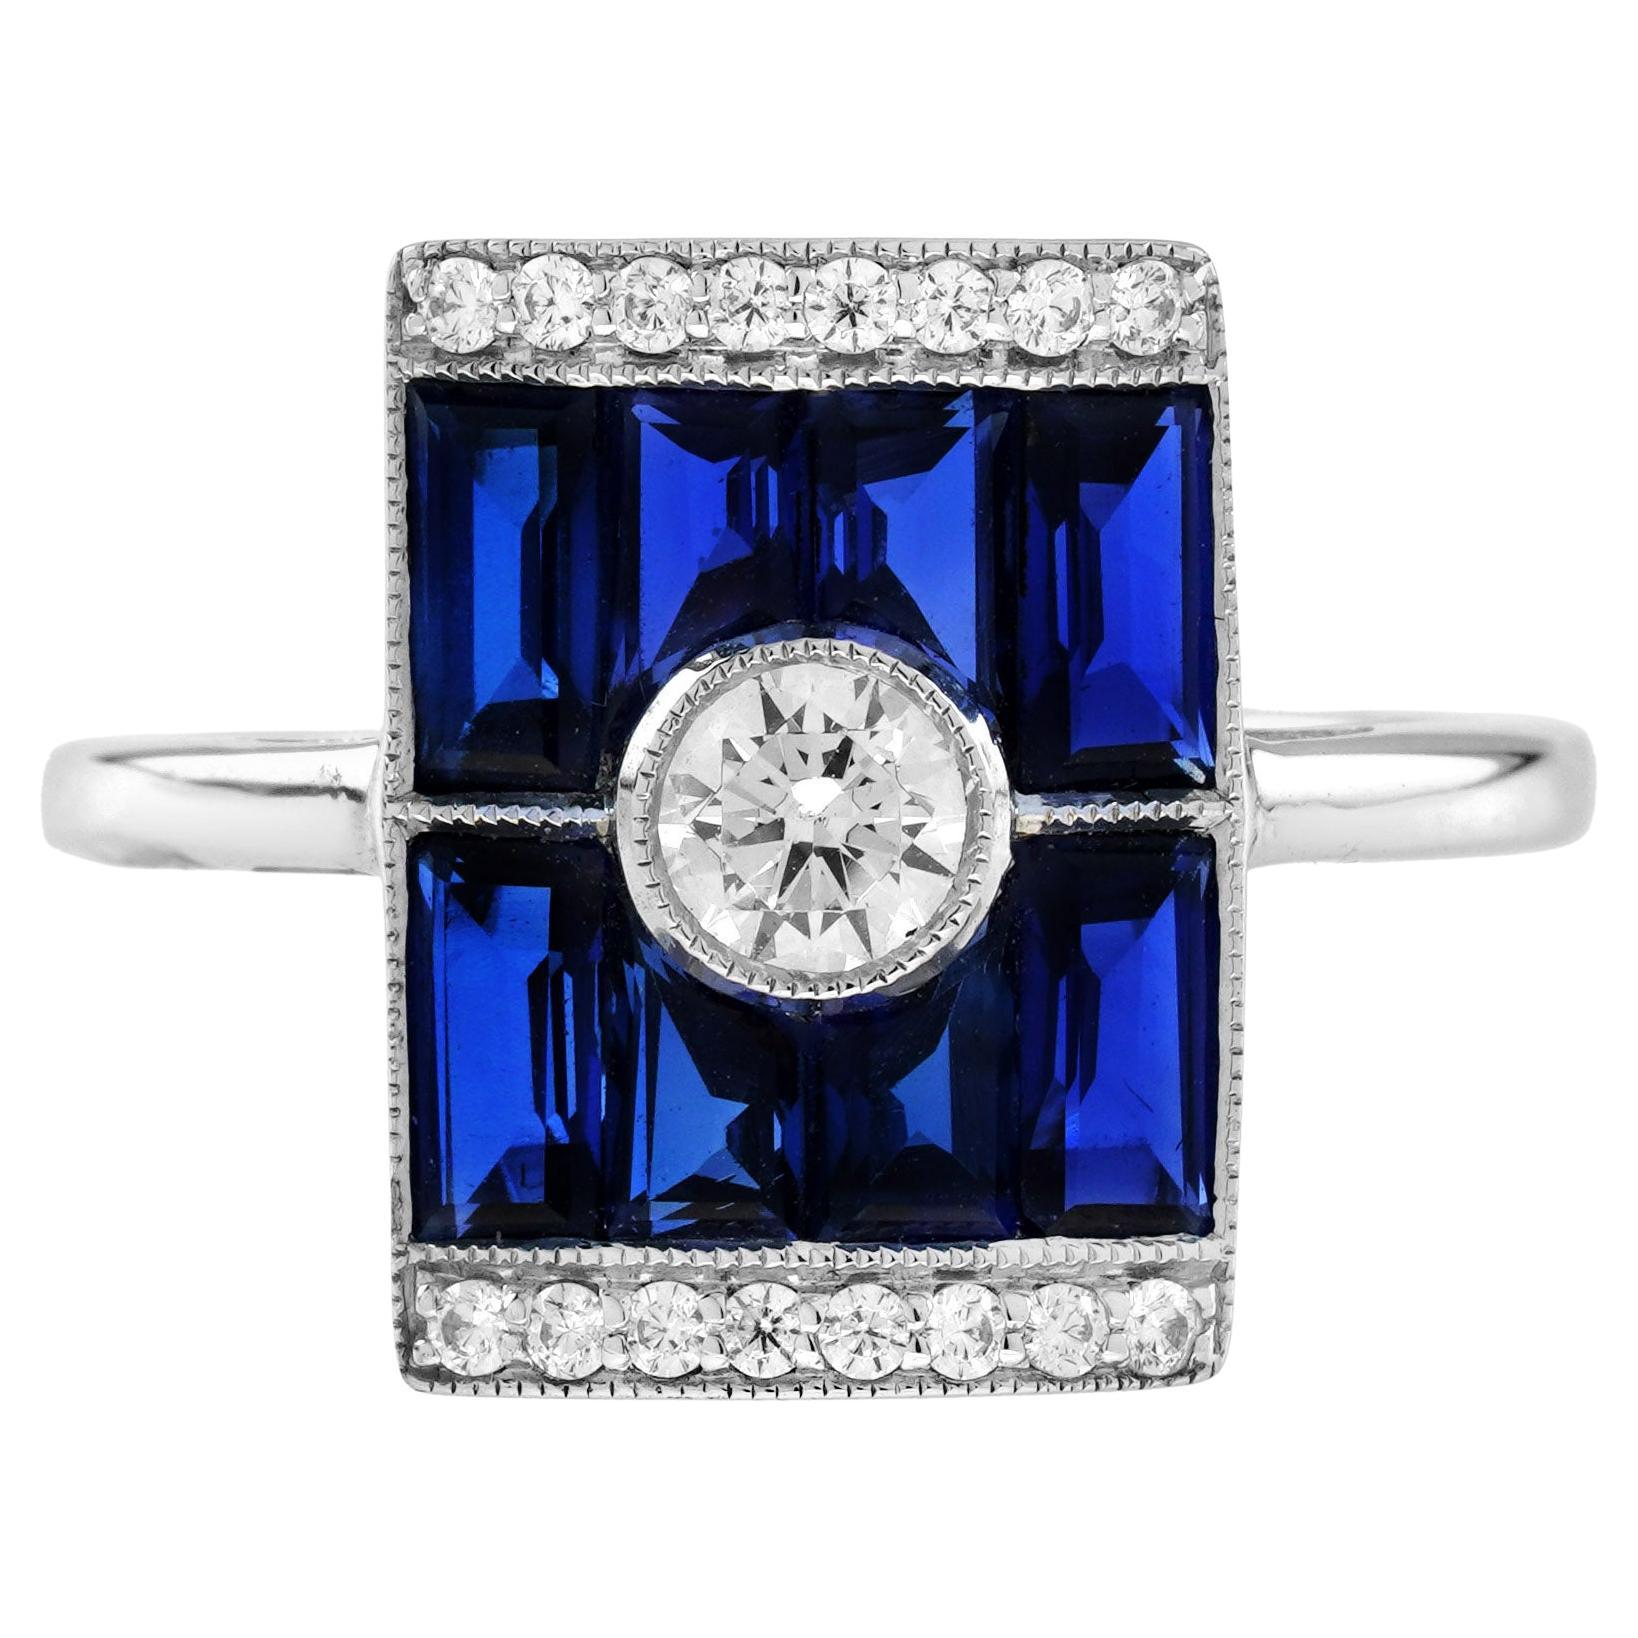 Diamond and Blue Sapphire Art Deco Style Rectangular Ring in 18K White Gold